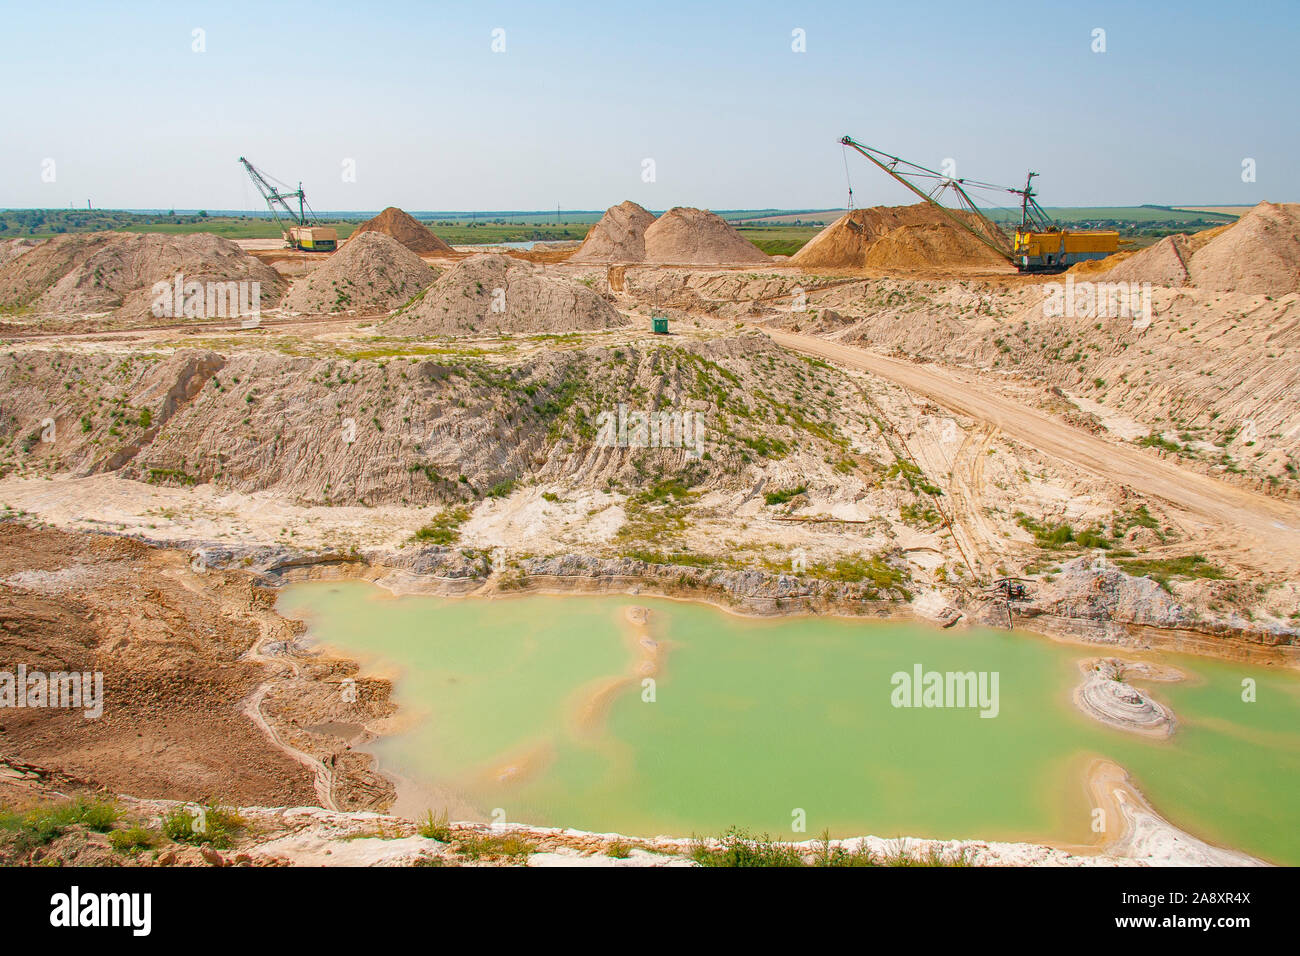 A dragline walking excavator produces sand in a clay quarry. Zaporizhzhya region, Ukraine. June 2012 Stock Photo